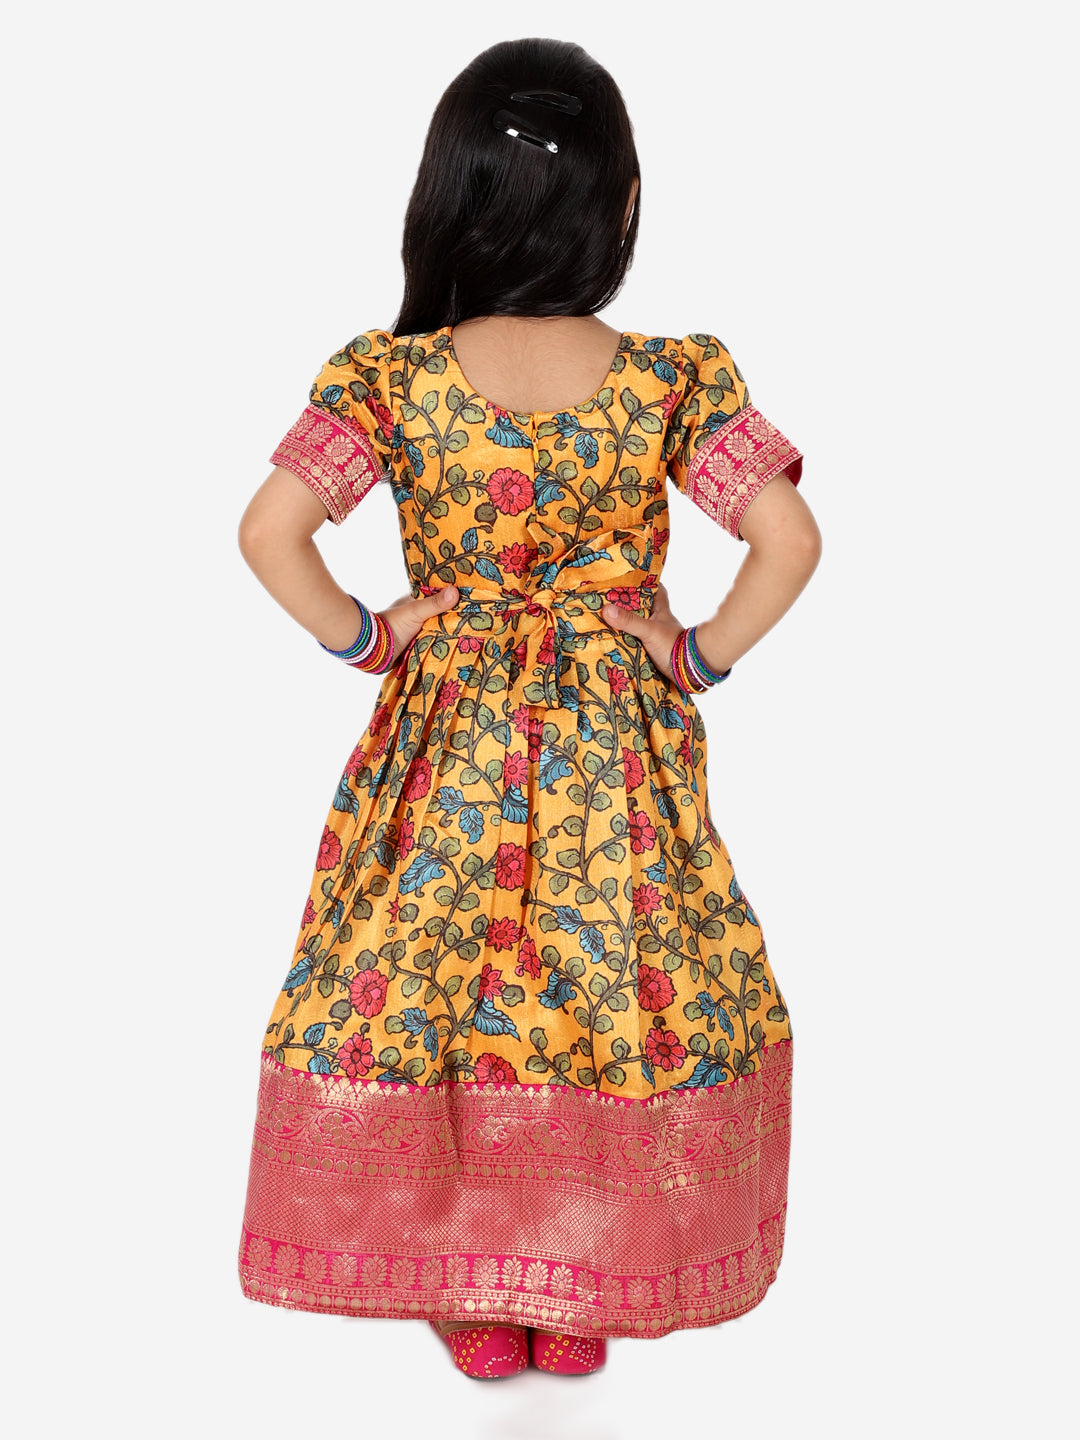 BownBee Kalamkari Print Party Dress Gown for Girls- Yellow